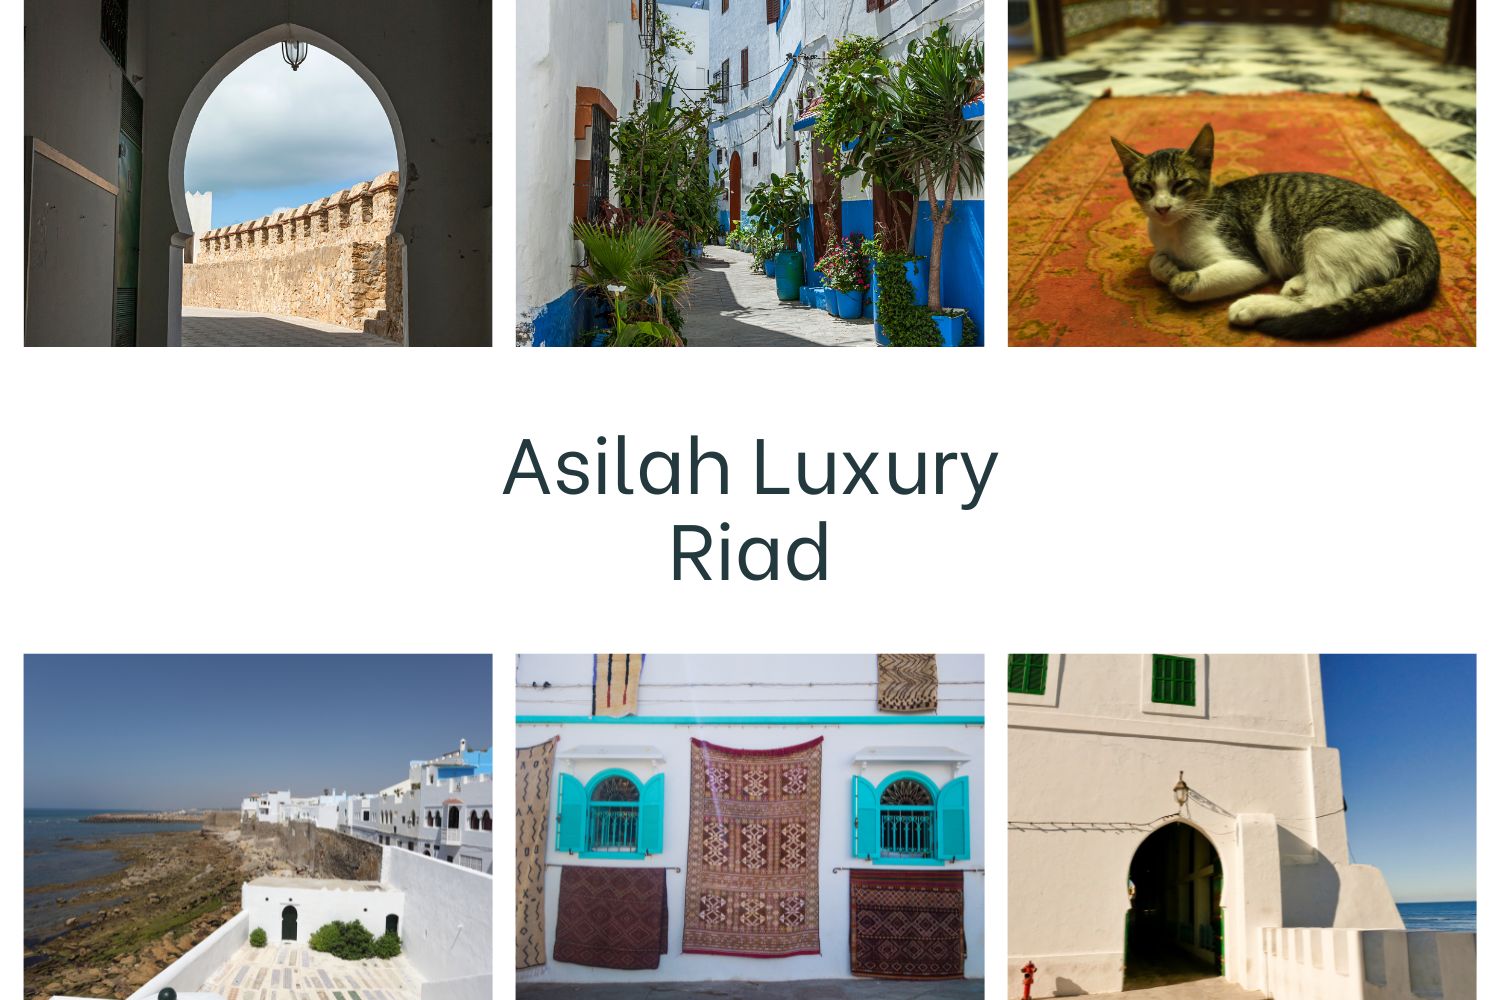 Asilah Luxury Riad